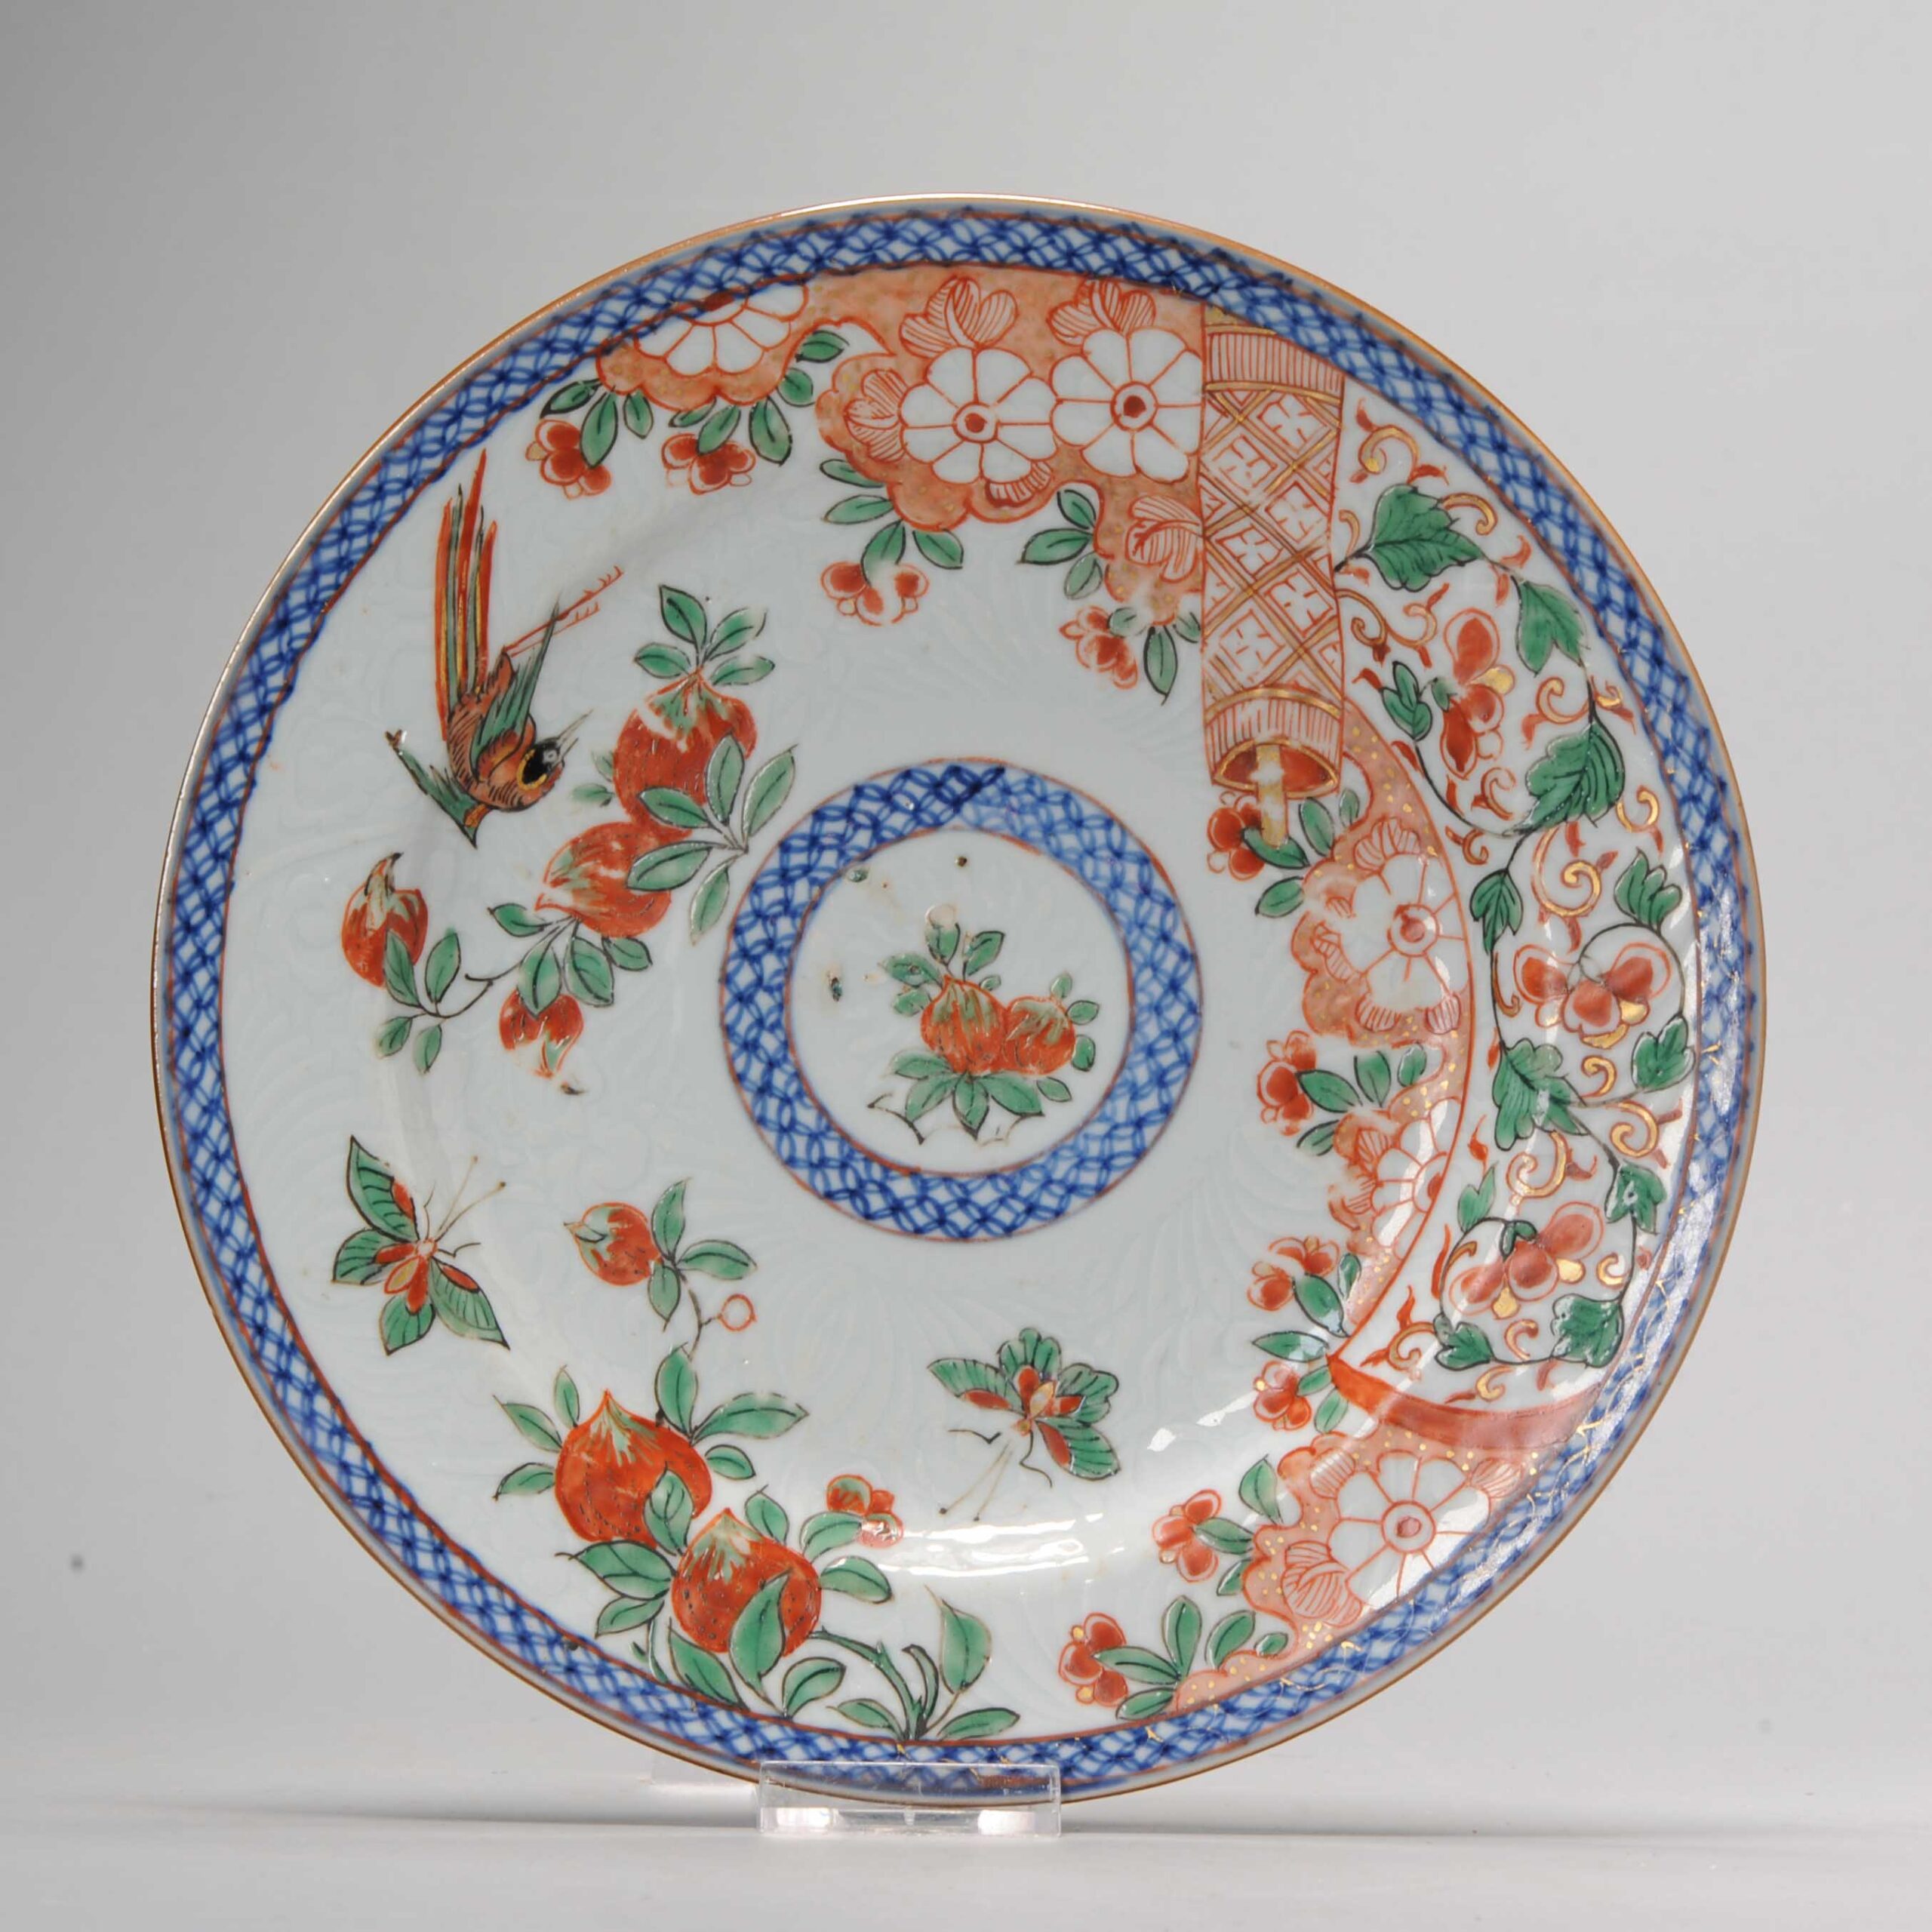 1087 Lovely Kangxi / Yongzheng Famille Verte Amsterdam Bont plate with flower and Bird scene also Anhua